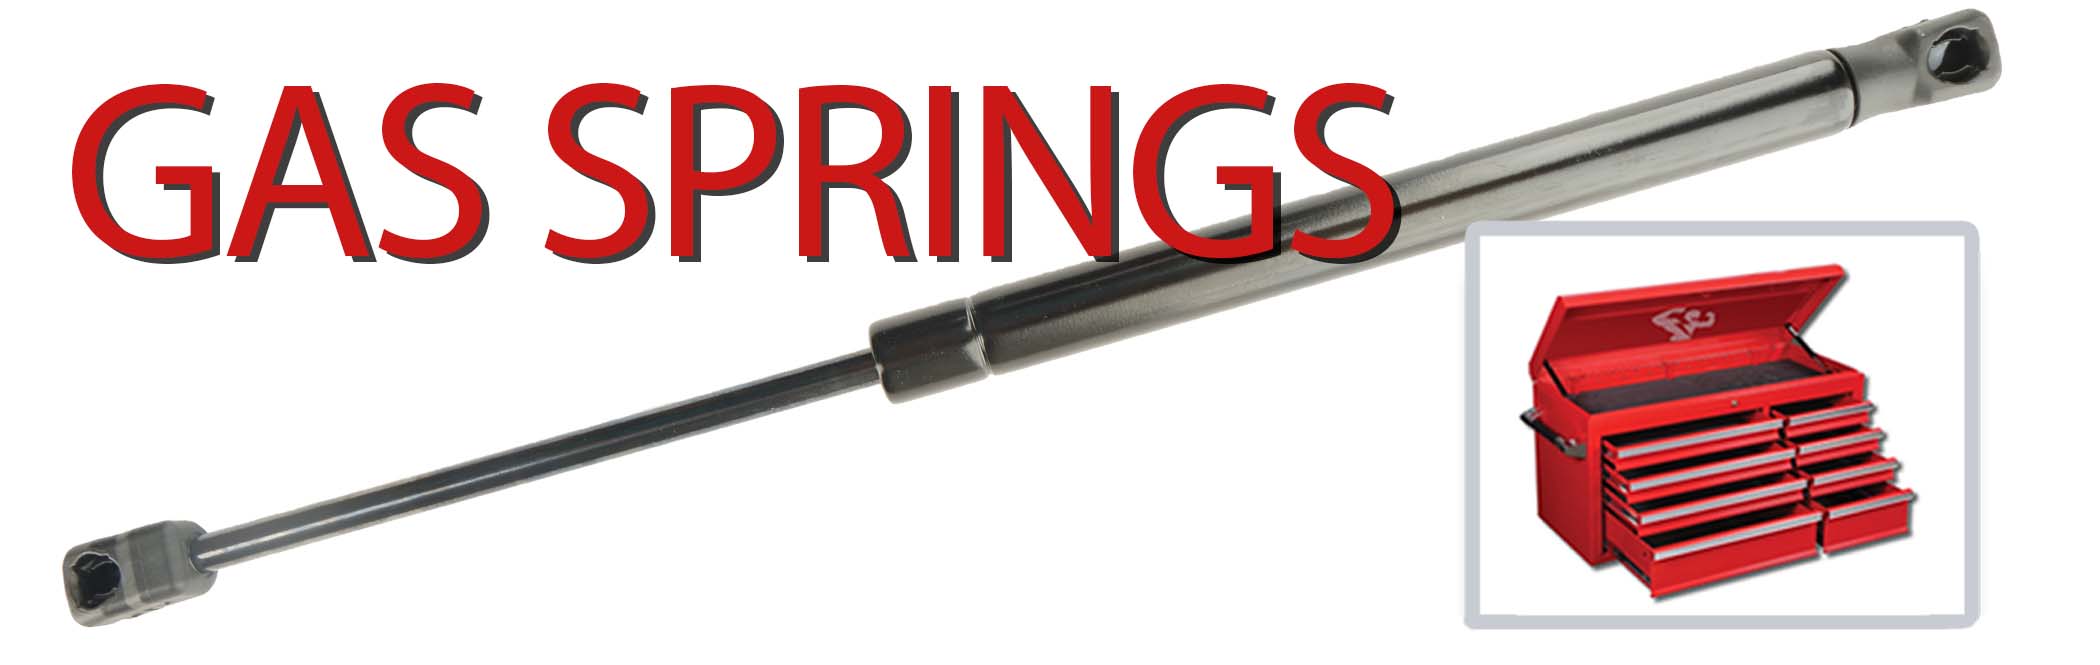 gas-spring-banner